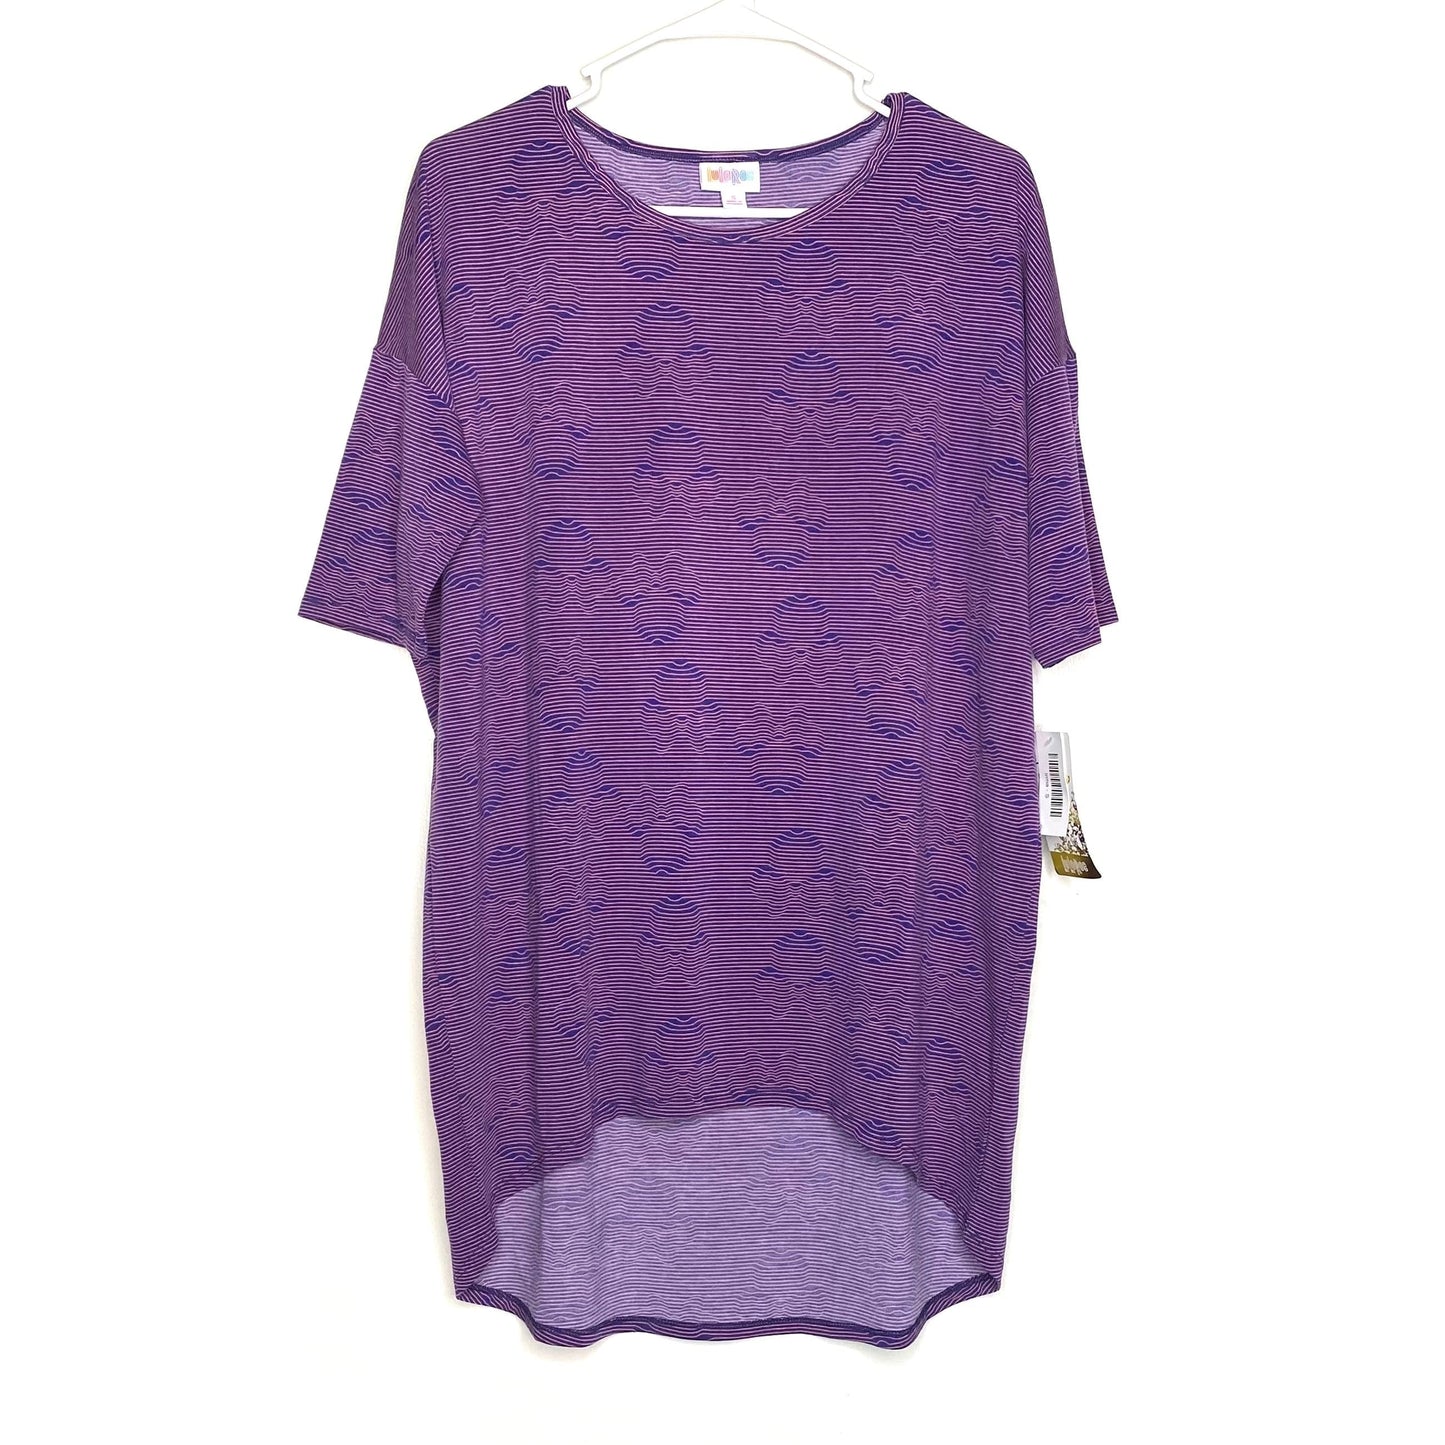 LuLaRoe Womens Size S Irma Purple Striped/Graphic T-Shirt Hidden Minnie S/s NWT